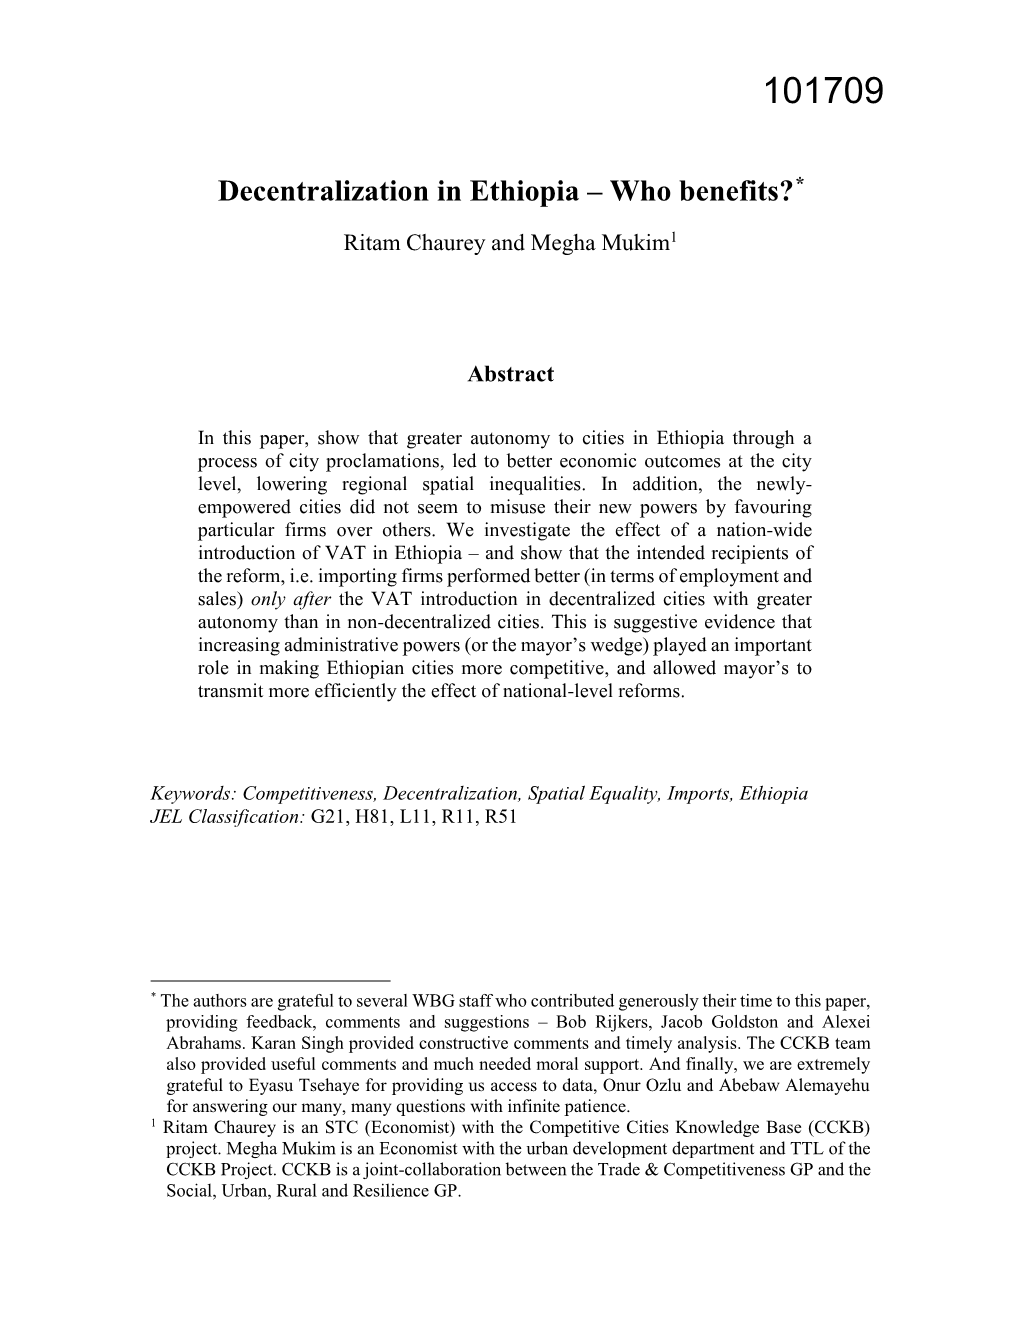 Decentralization in Ethiopia – Who Benefits?*